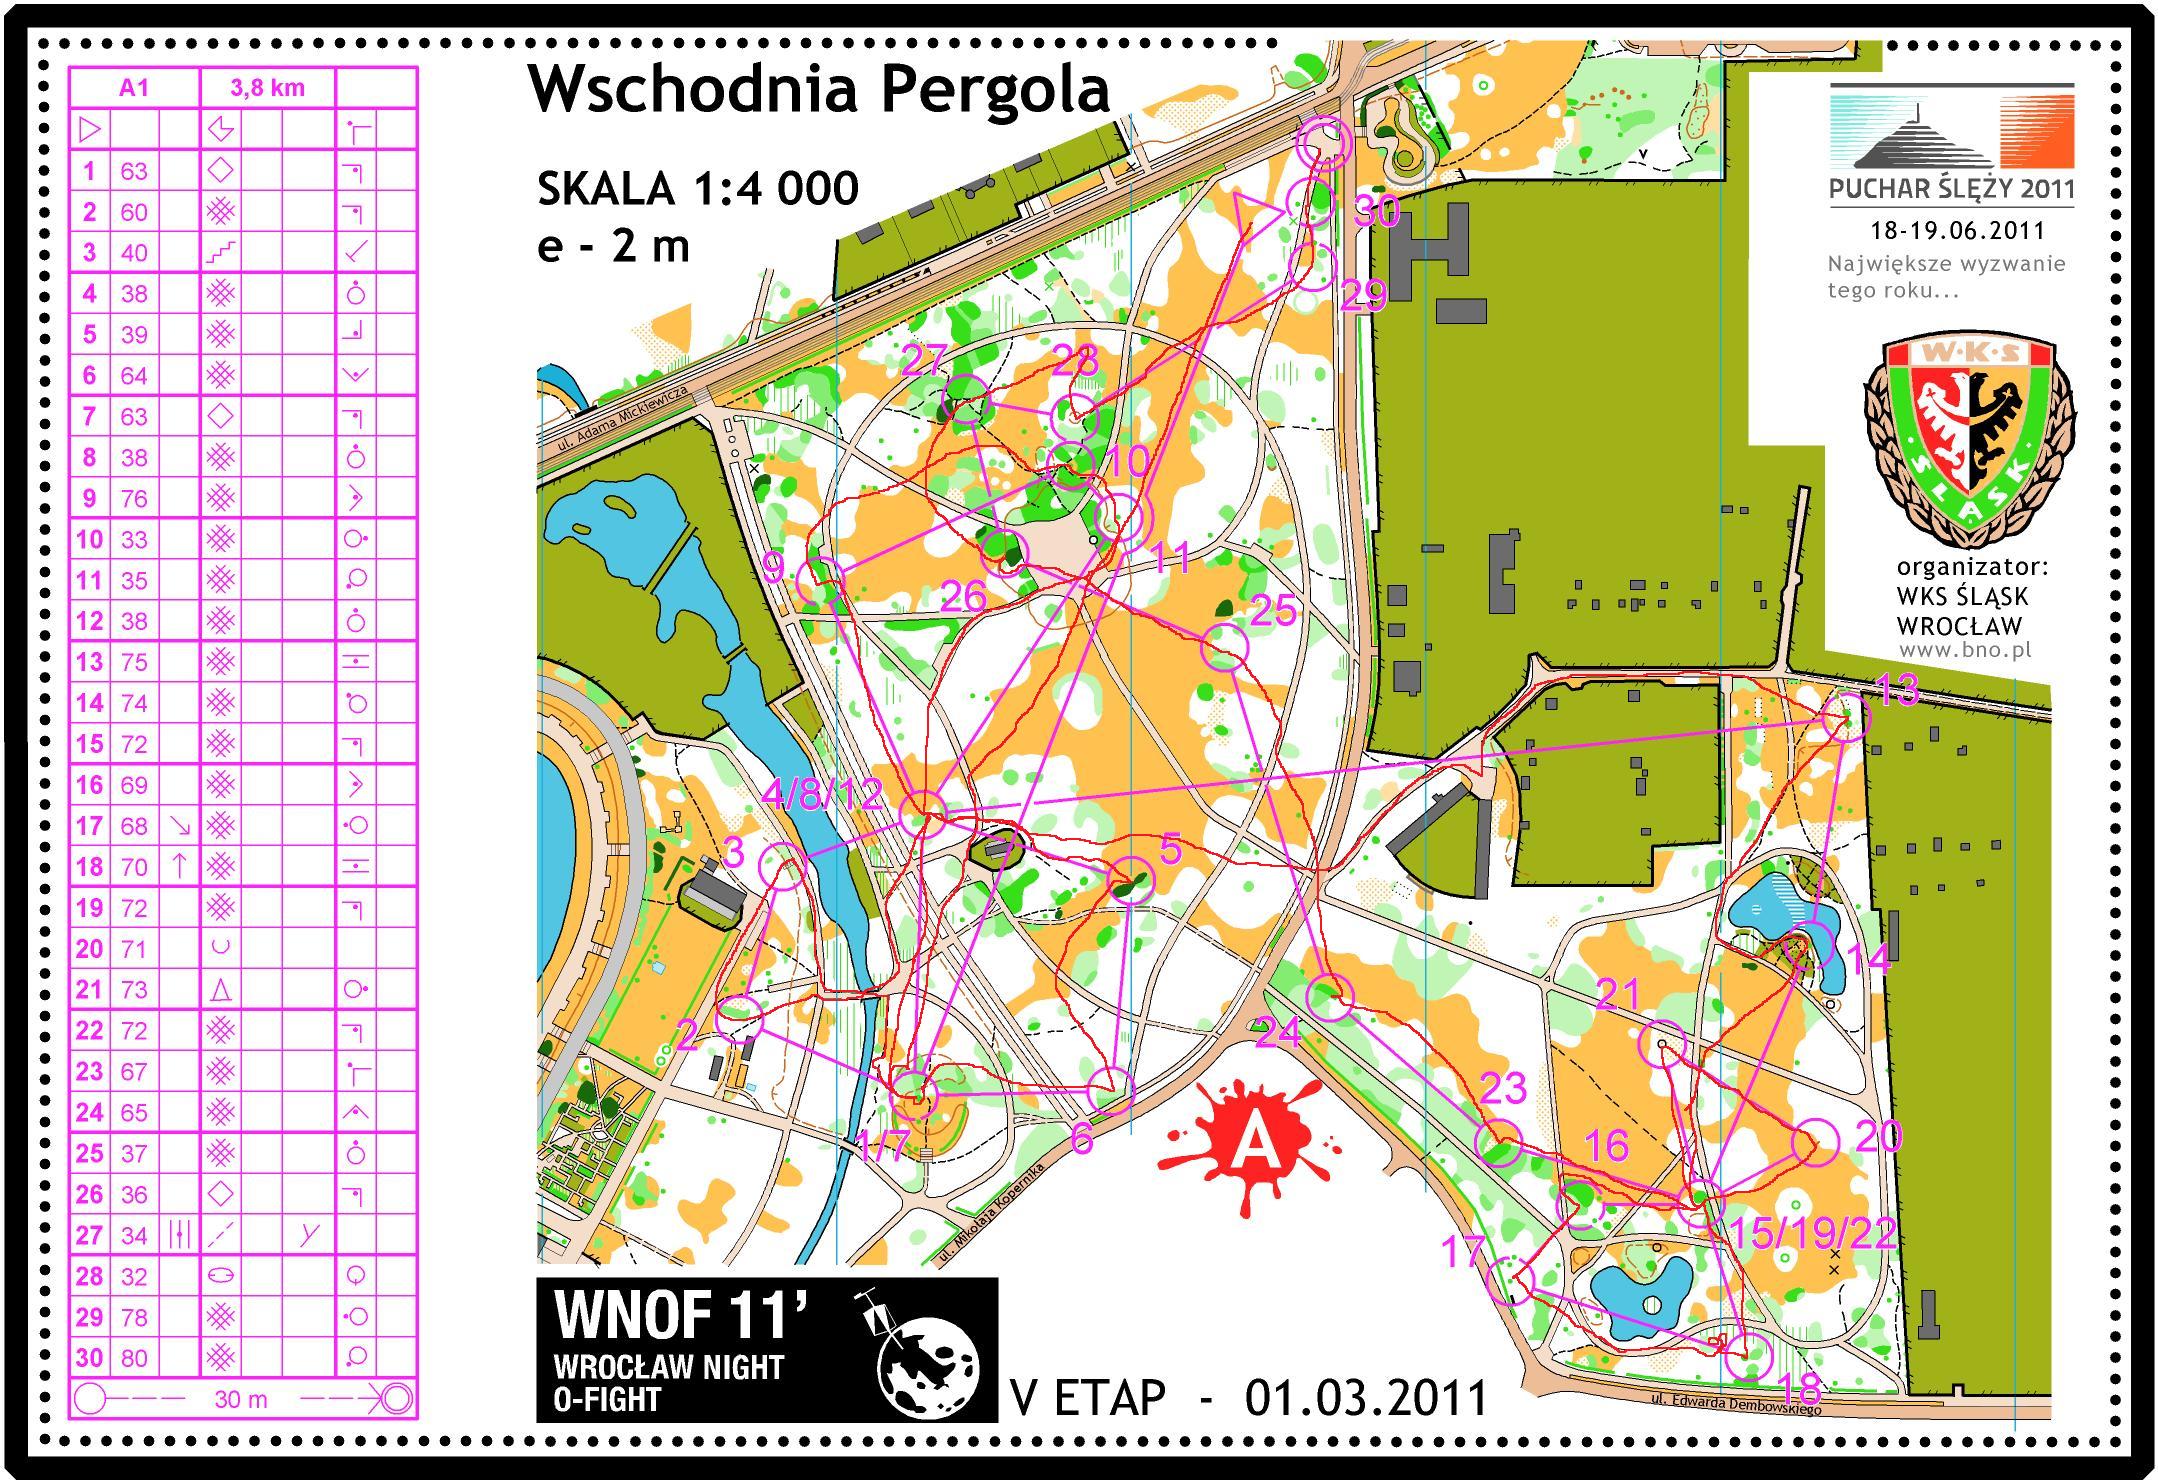 Wroclaw Night Orienteering Fight (01.03.2011)